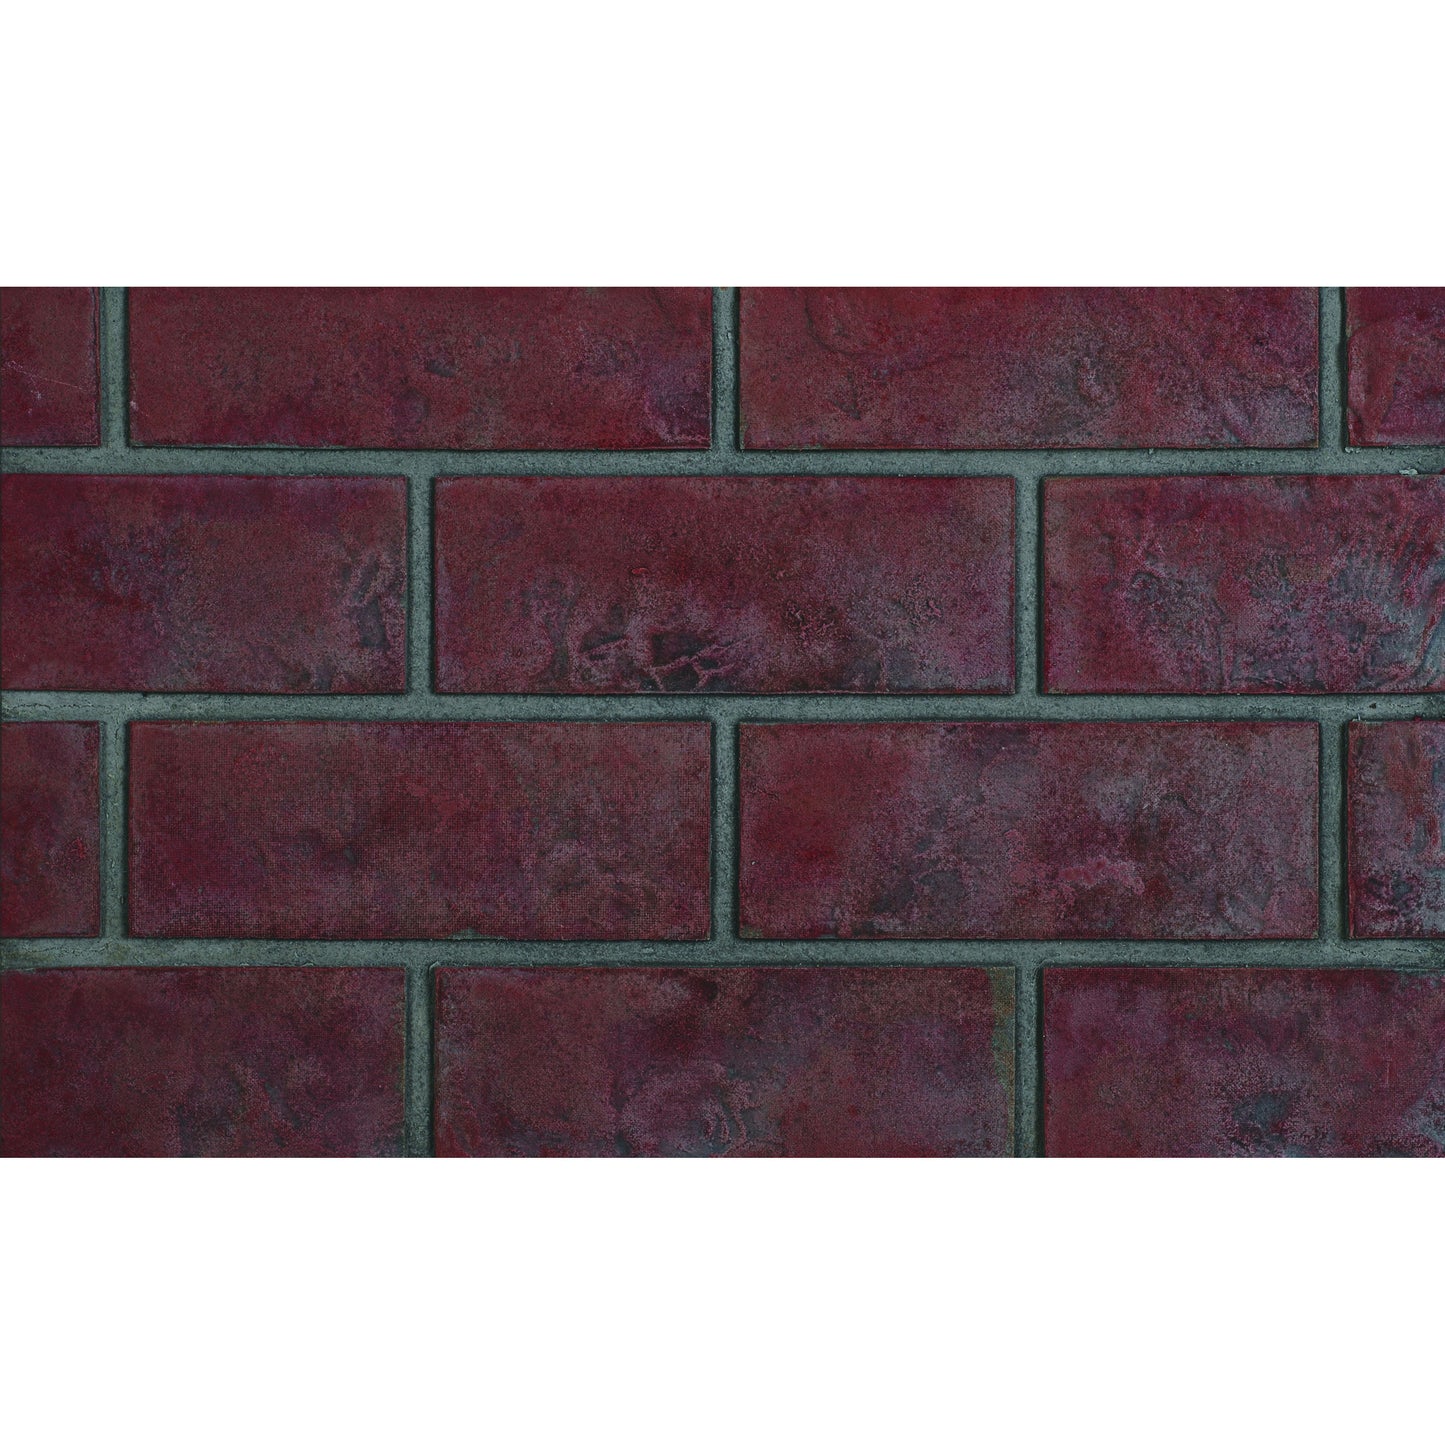 NAPDBPEX42OS | Napoleon EX42 Decorative Brick Panels | Standard Pattern | Old Town Red